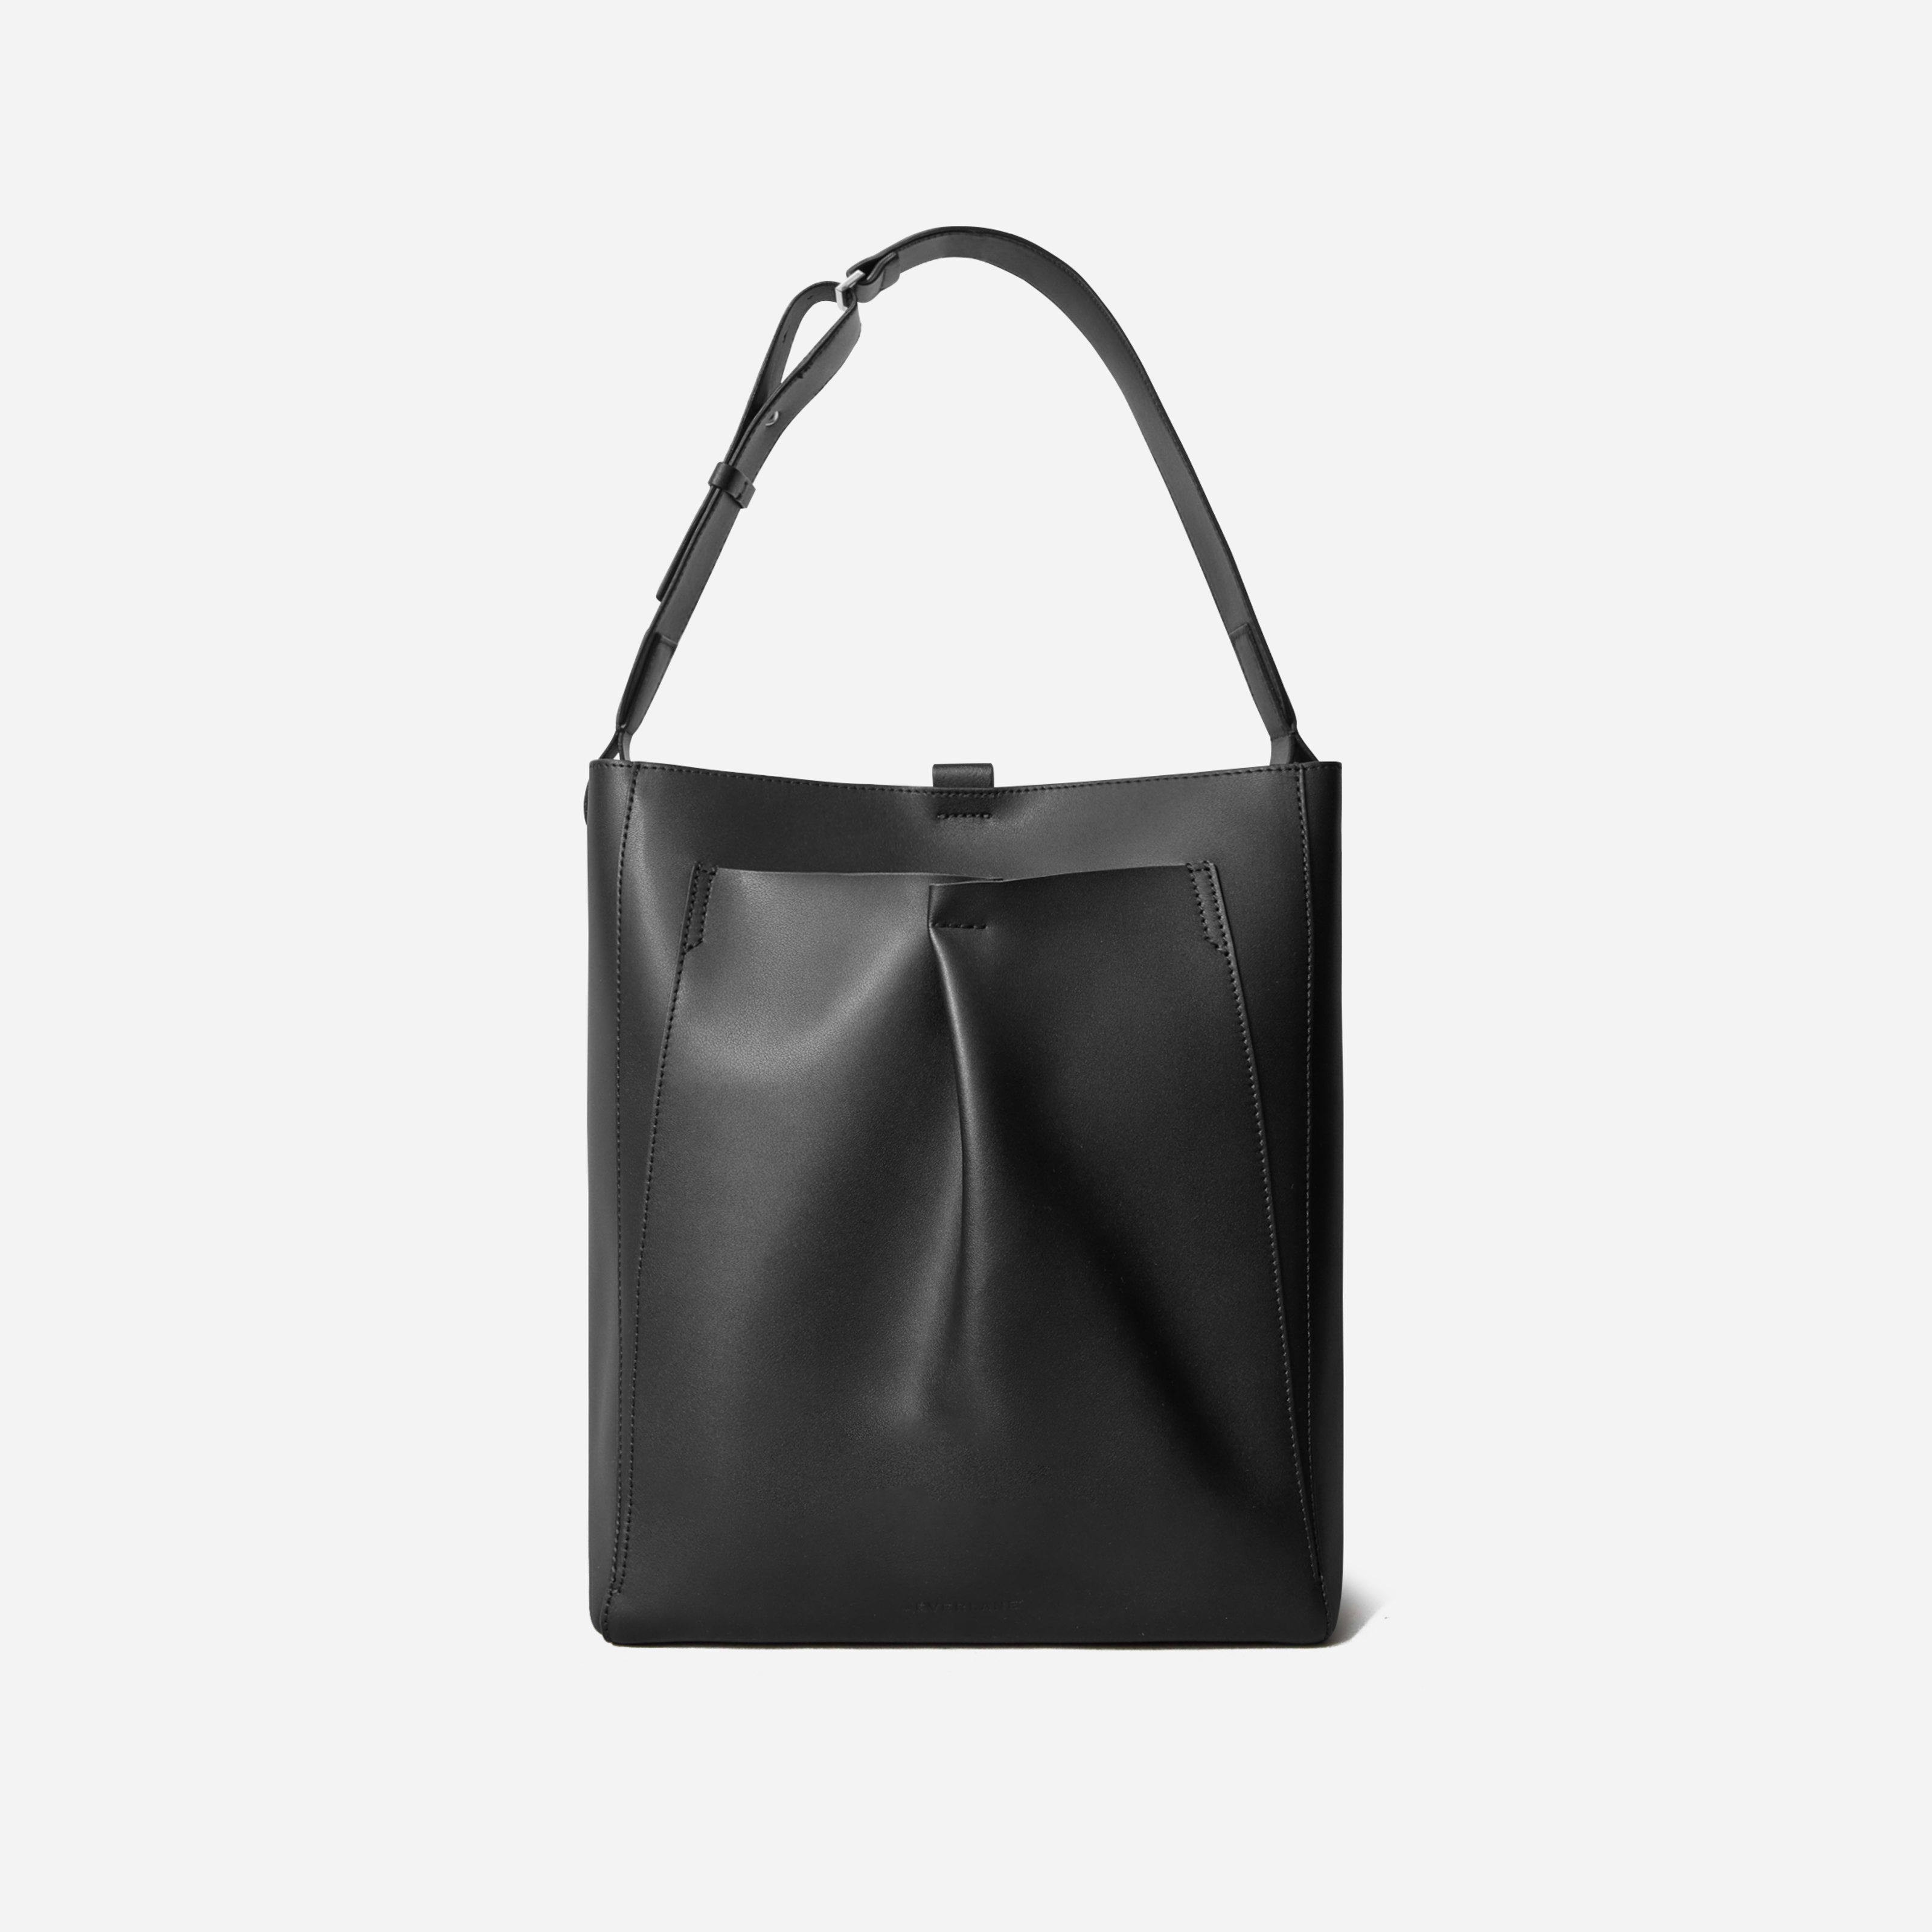 studio bag by everlane in black